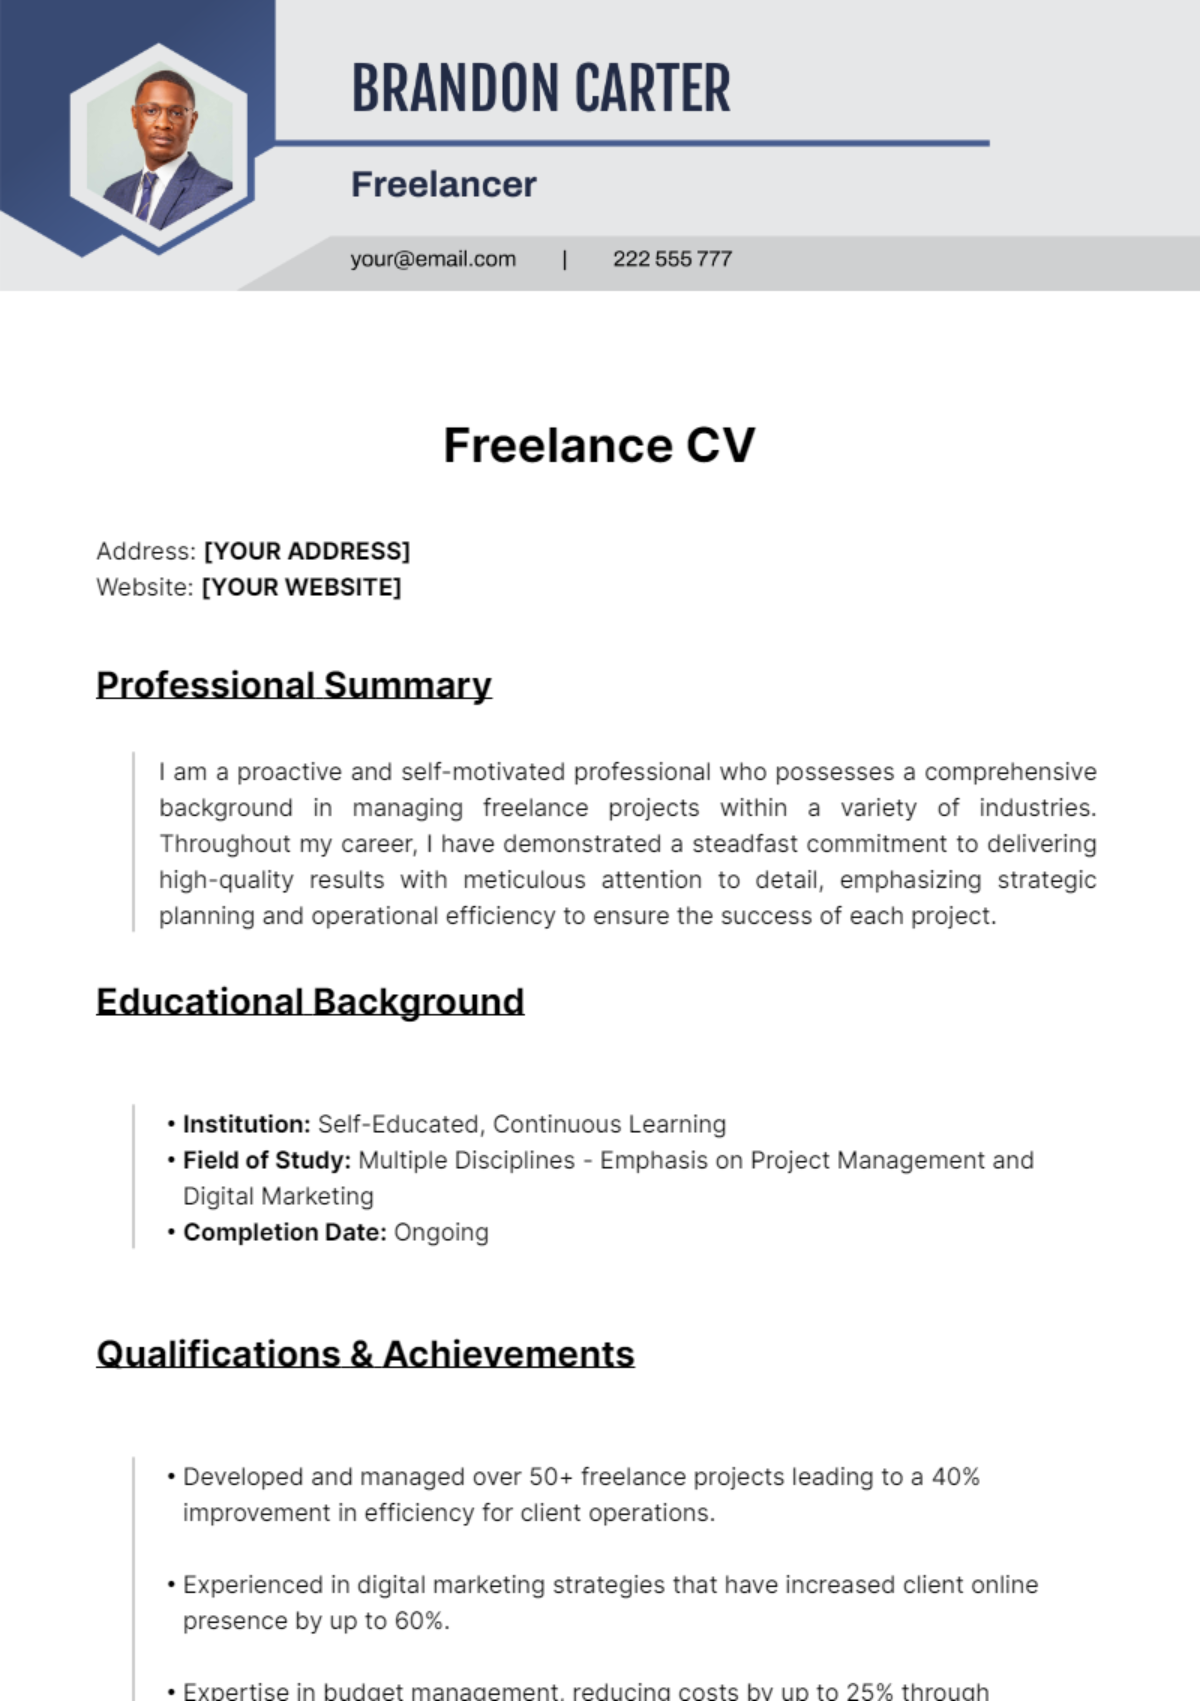 Freelance CV Template